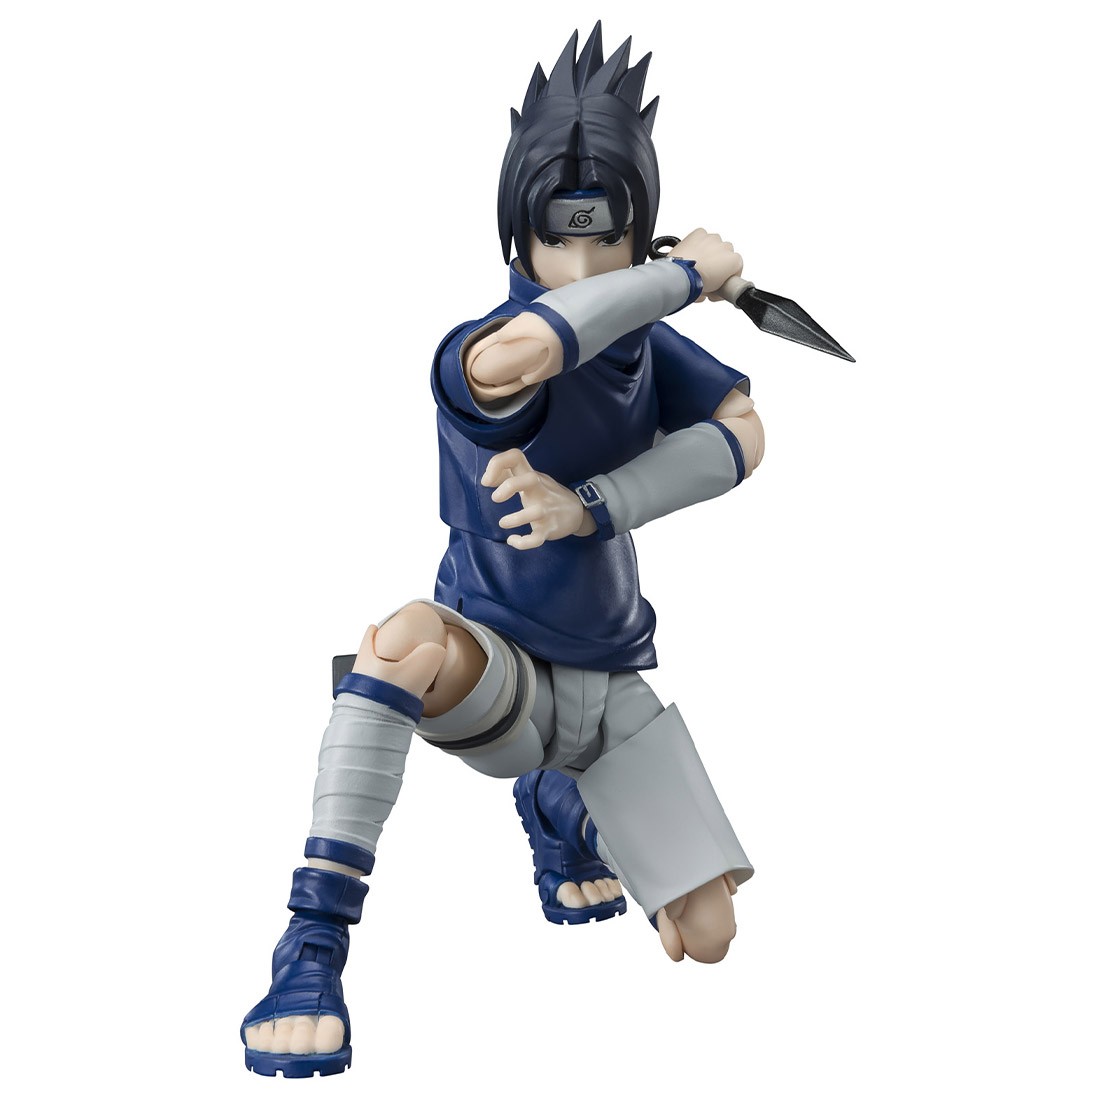 Bandai S.H.Figuarts Naruto Ninja Prodigy of the Uchiha Clan Bloodline Sasuke Uchiha Figure (blue)